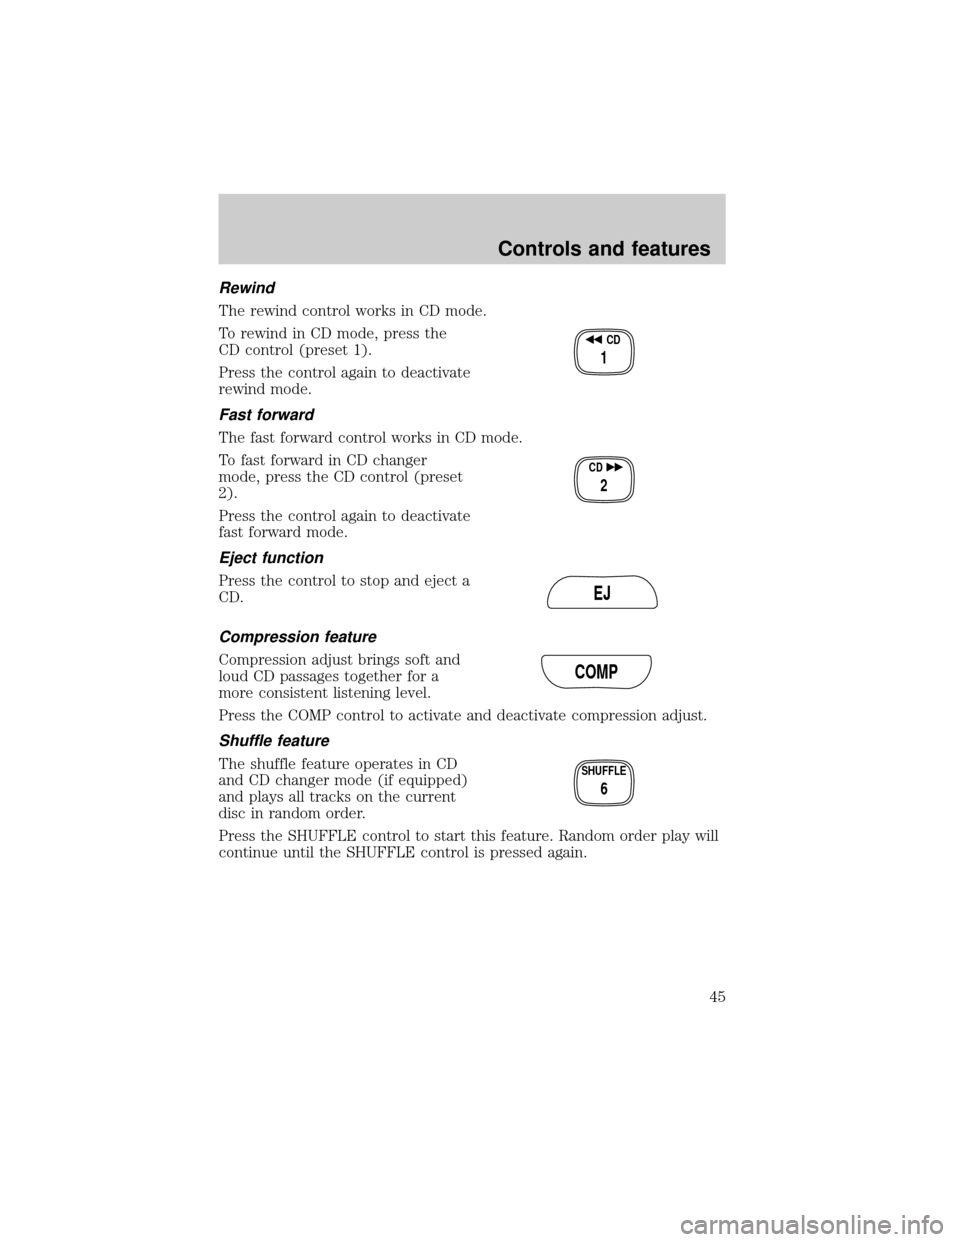 Mercury Grand Marquis 2000  s Service Manual Rewind
The rewind control works in CD mode.
To rewind in CD mode, press the
CD control (preset 1).
Press the control again to deactivate
rewind mode.
Fast forward
The fast forward control works in CD 